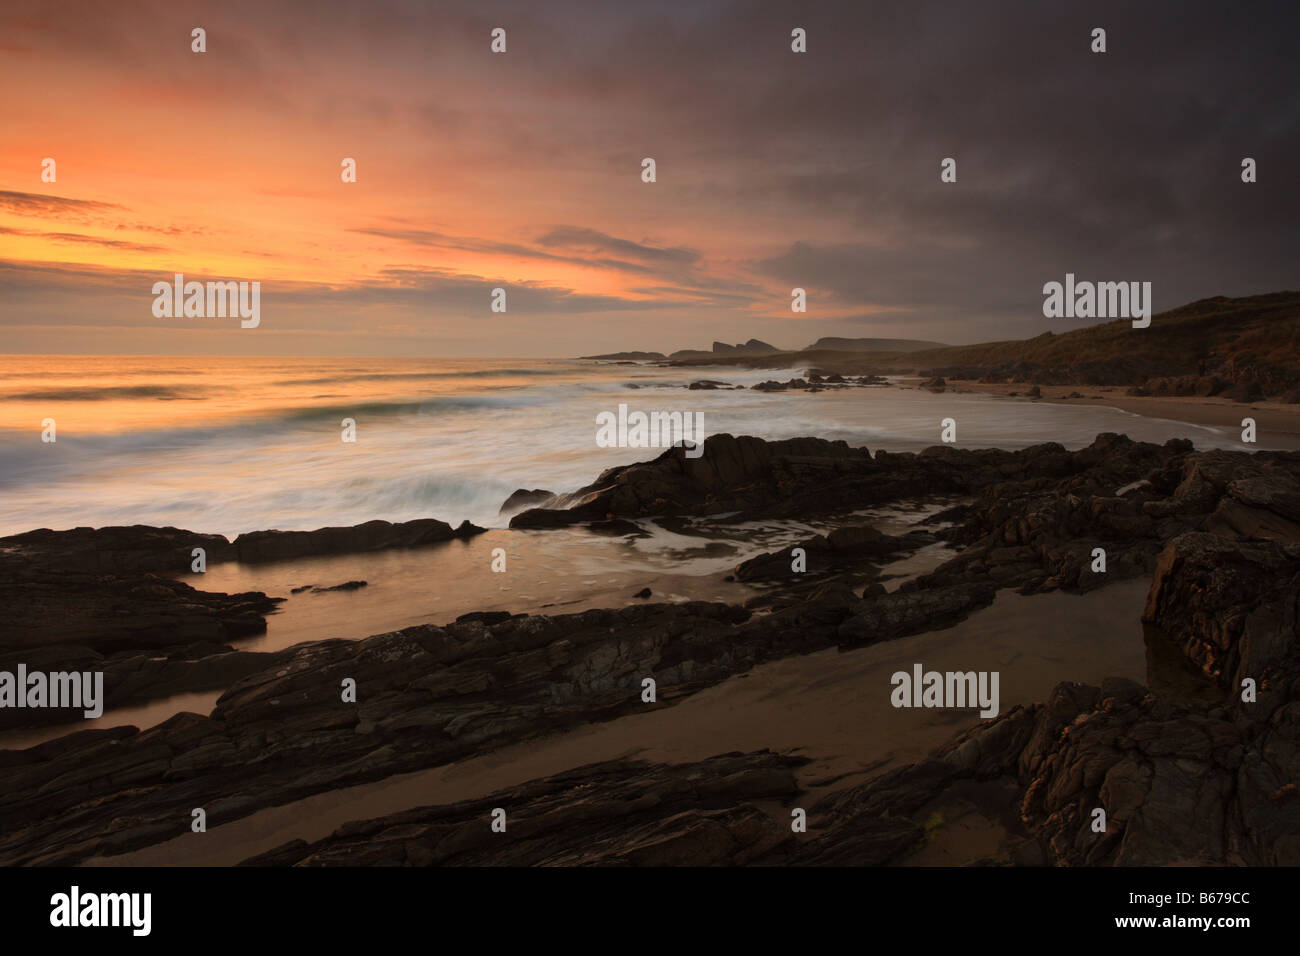 Scozia beach, 'Saligo Bay' tramonto, onde sabbia e rocce. Foto Stock